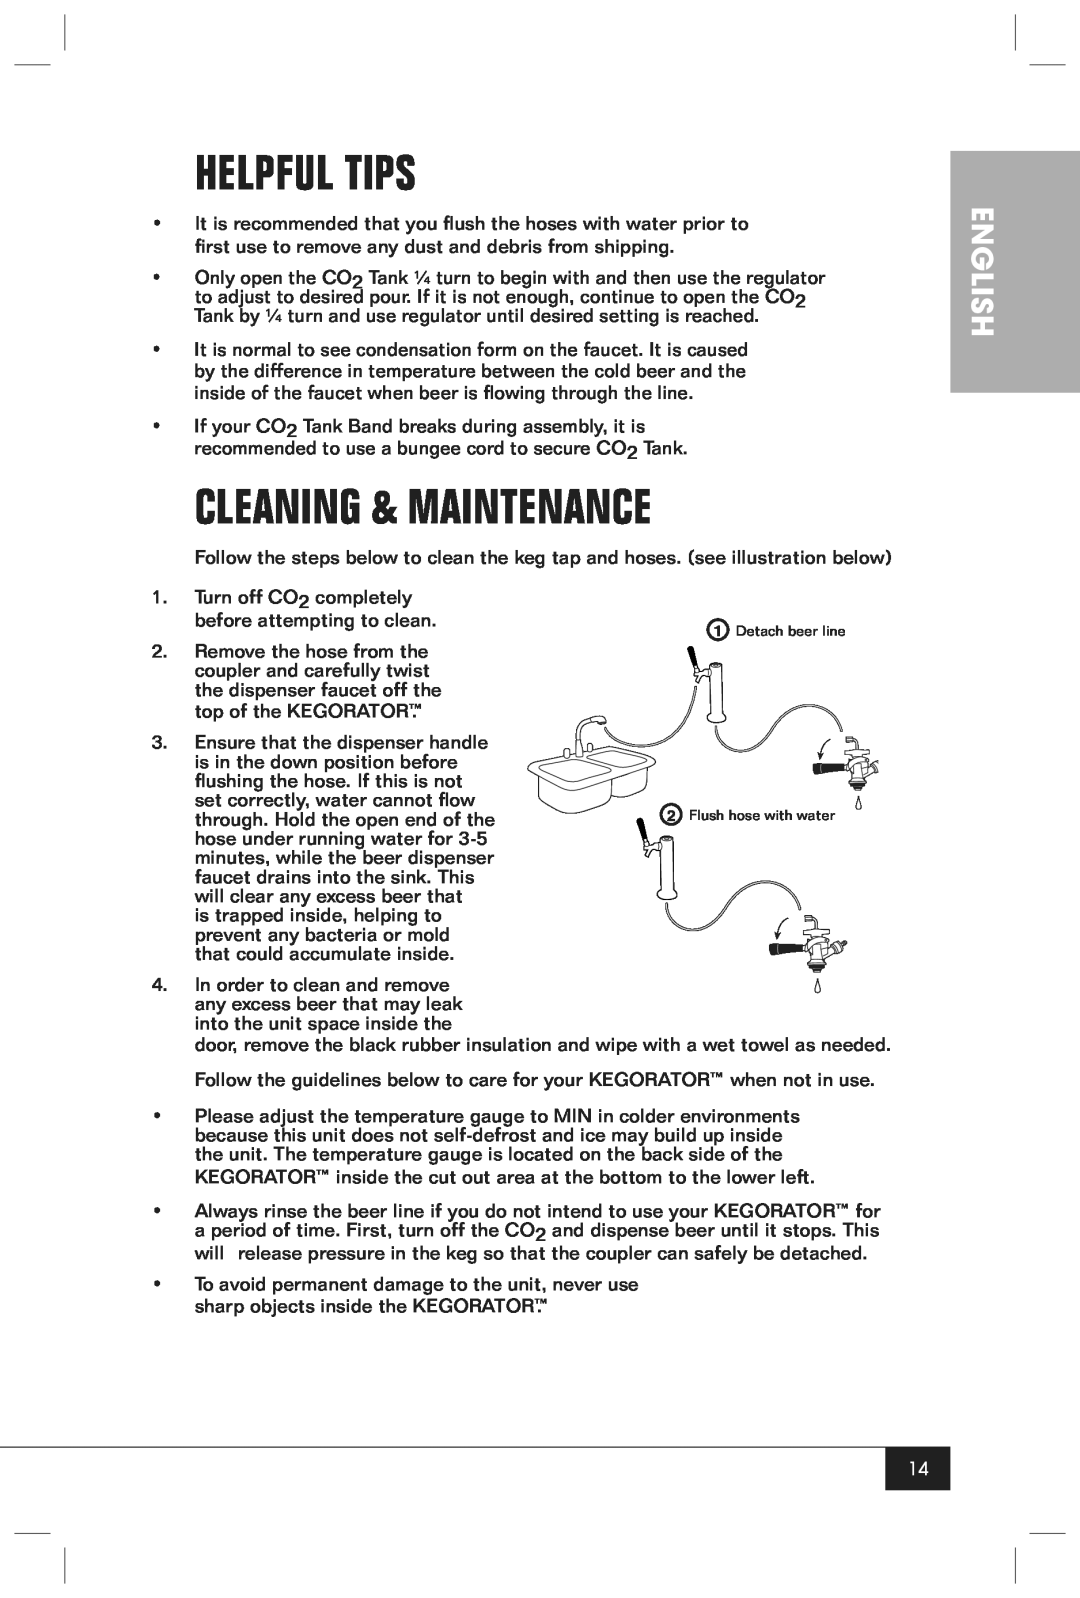 Nostalgia Electrics KRS-2150 manual Helpful Tips, Cleaning & Maintenance, English 